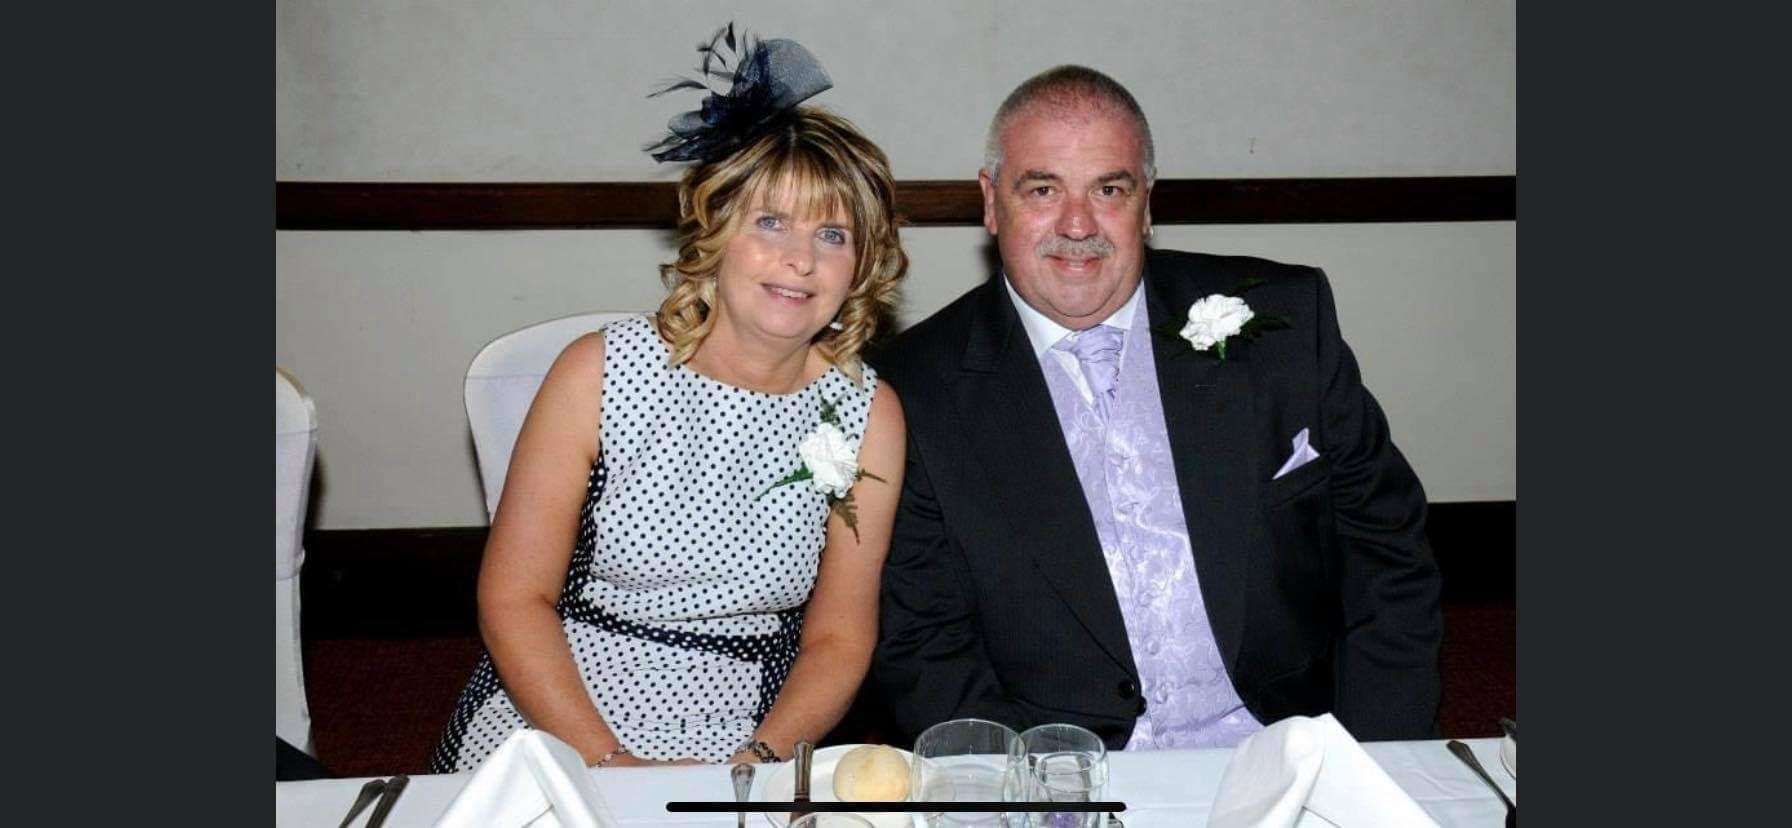 Scott Morrison's widow Diane won her case against British Rail over the death of her husband